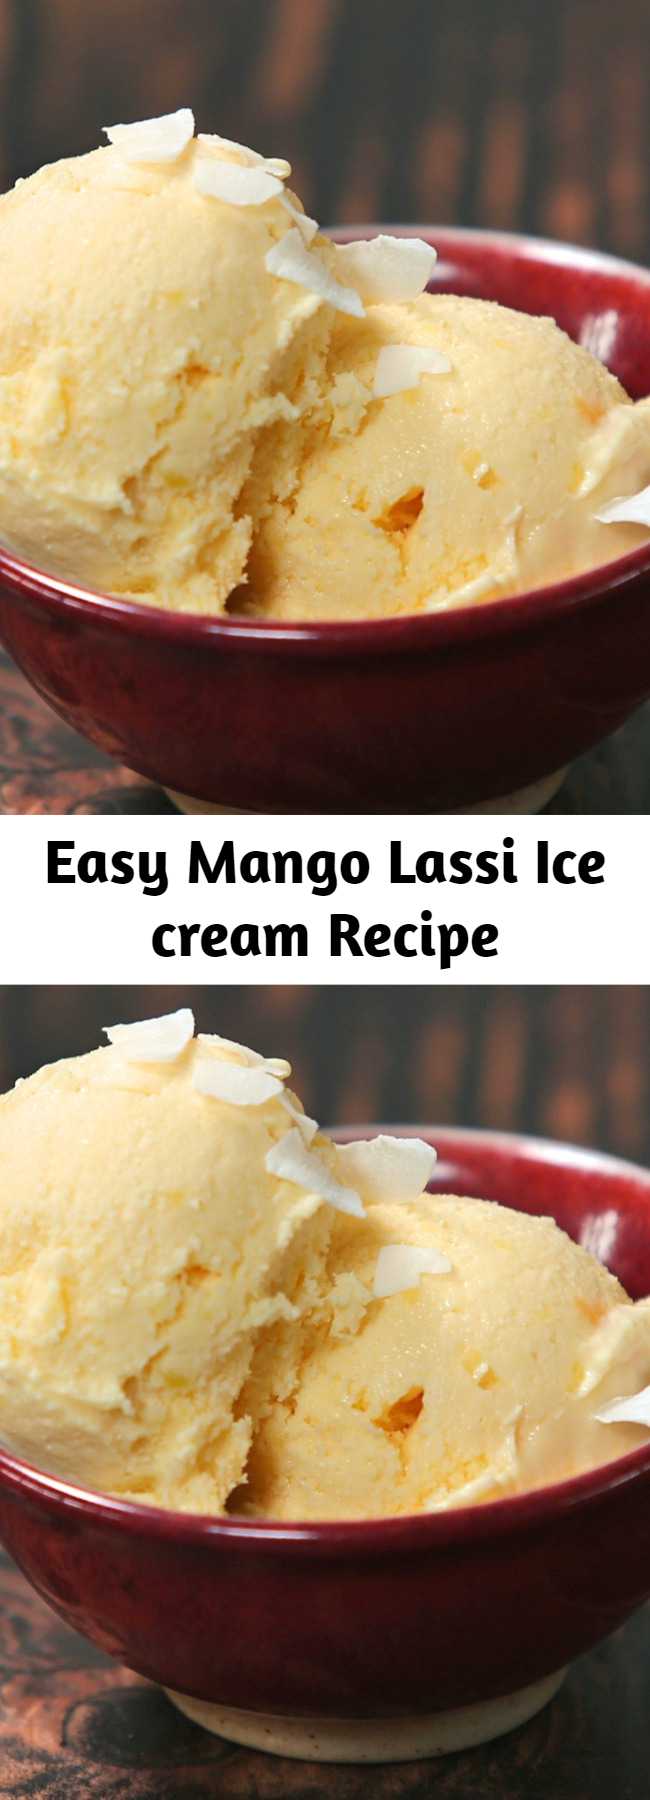 Easy Mango Lassi Ice cream Recipe - All of the flavor, less of the work.